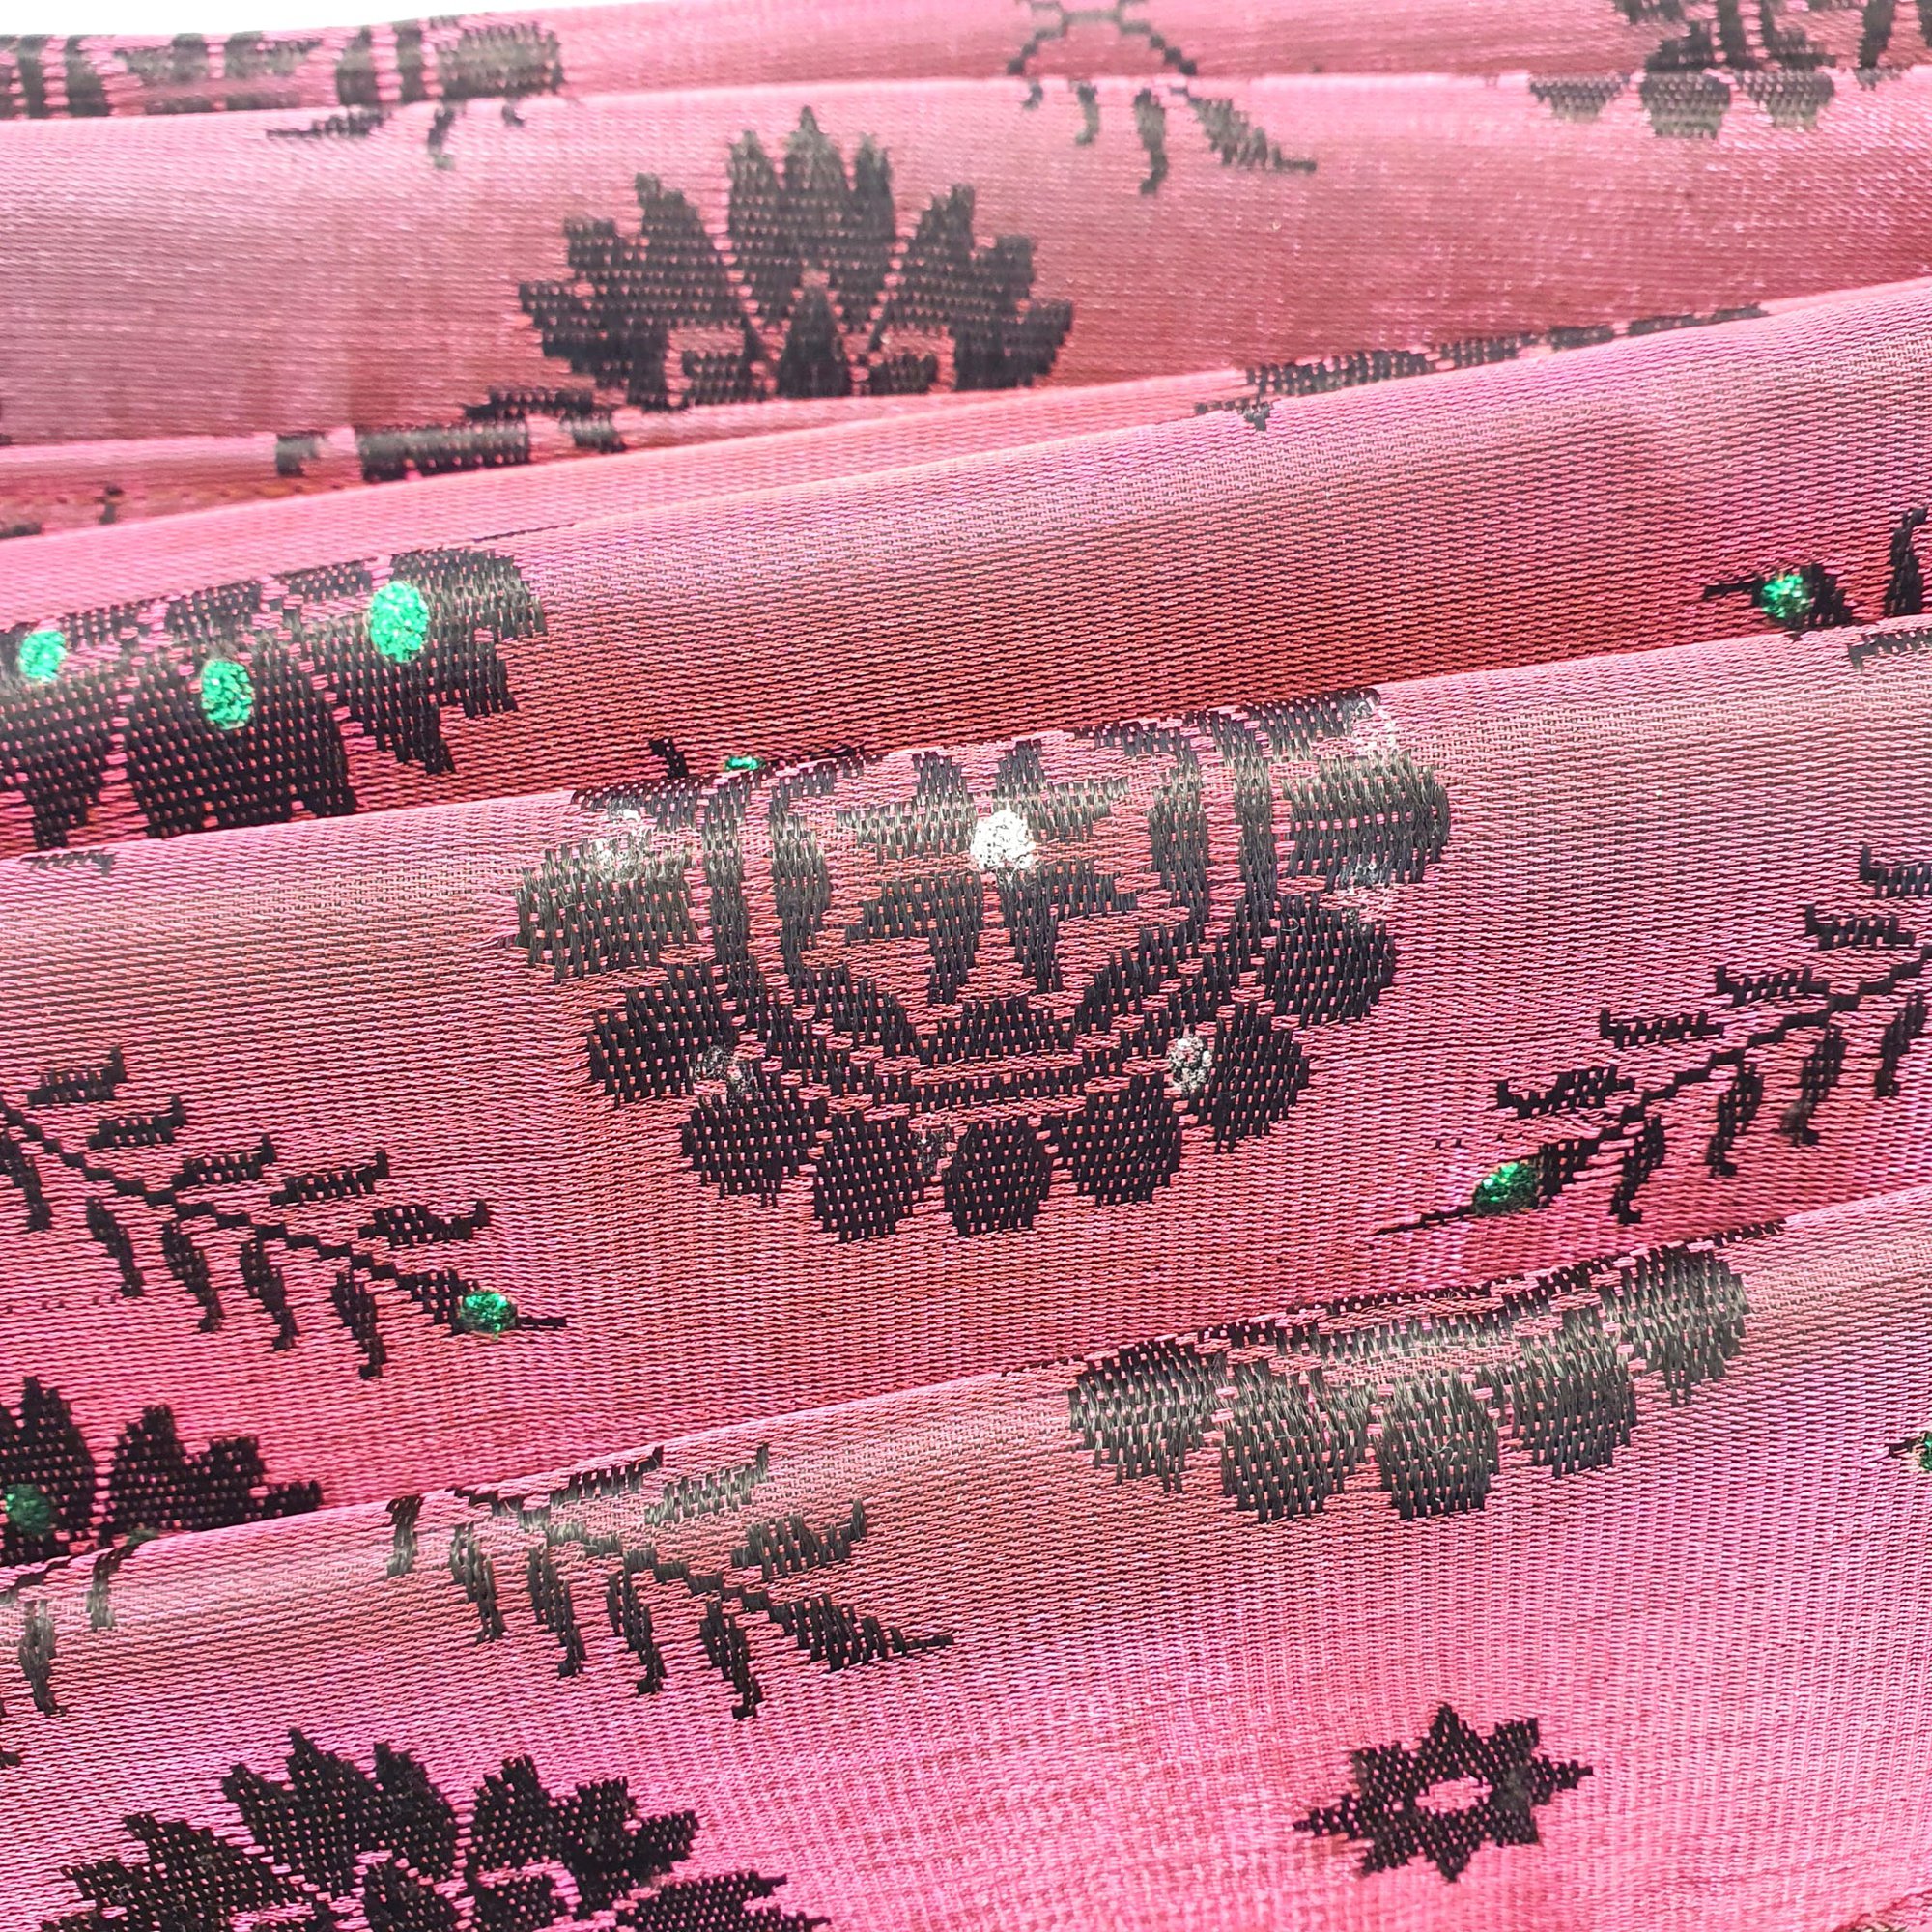 Handmade Sari Envelope Clutch Bag